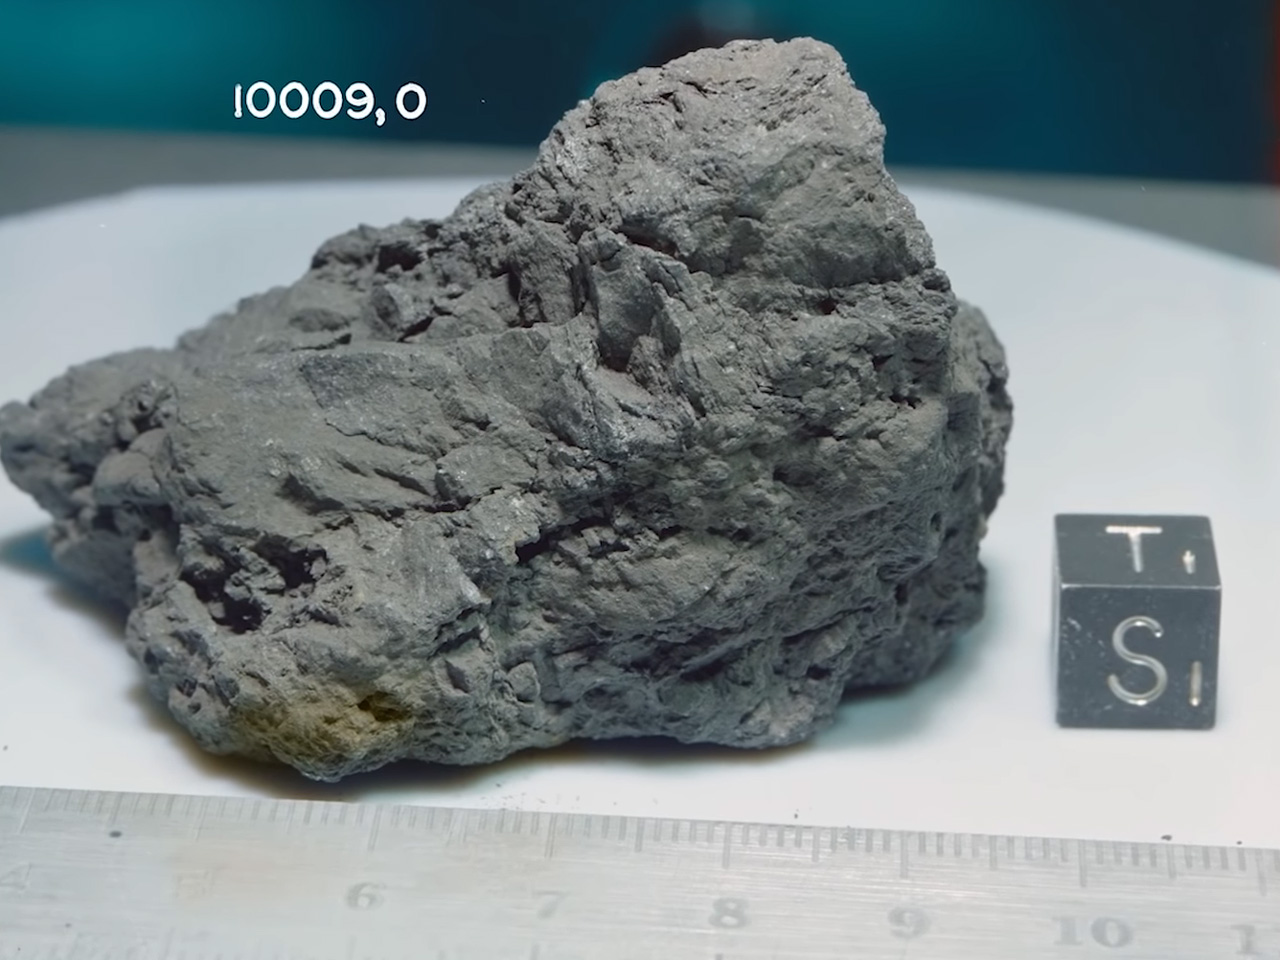 Photo of a lunar rock sample